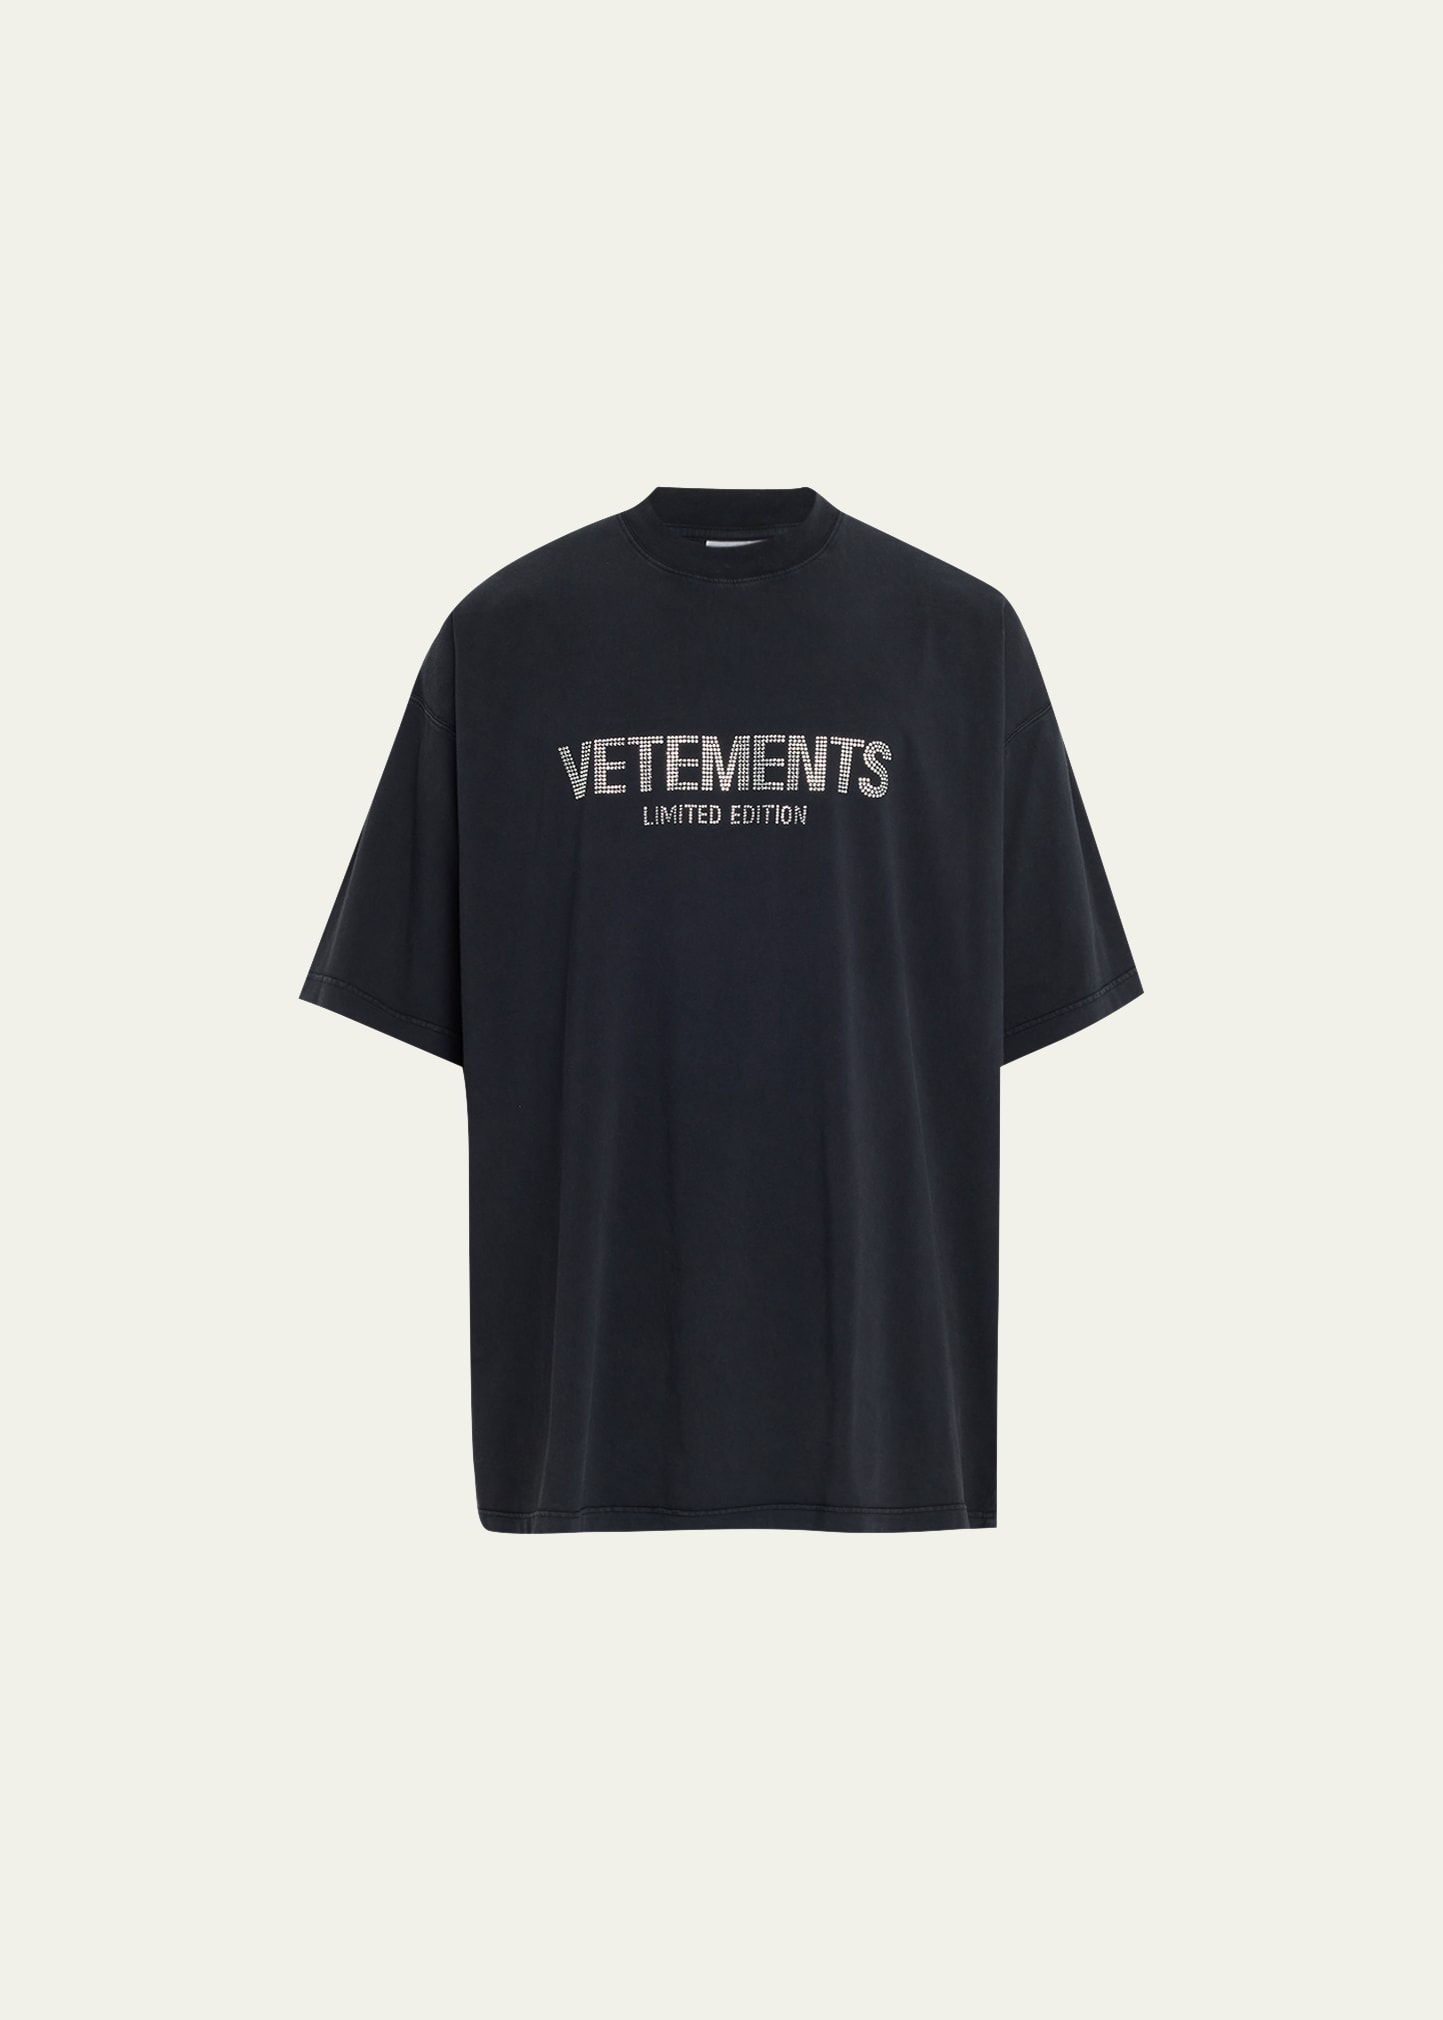 Vetements t-shirts for Men